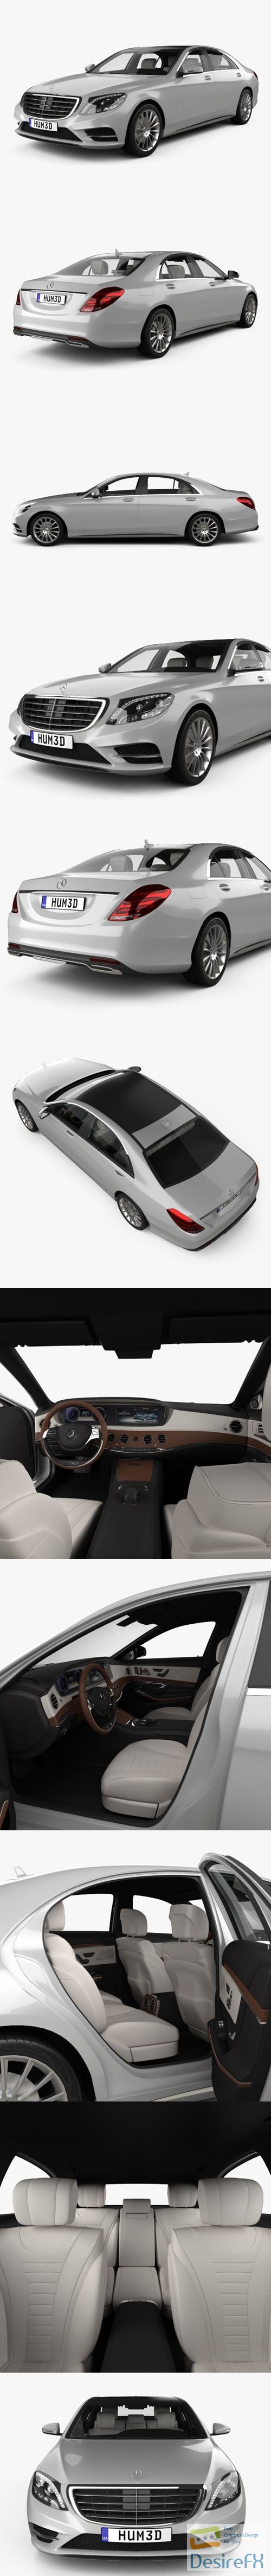 Mercedes-Benz S-class W222 with HQ interior 2014 3D Model